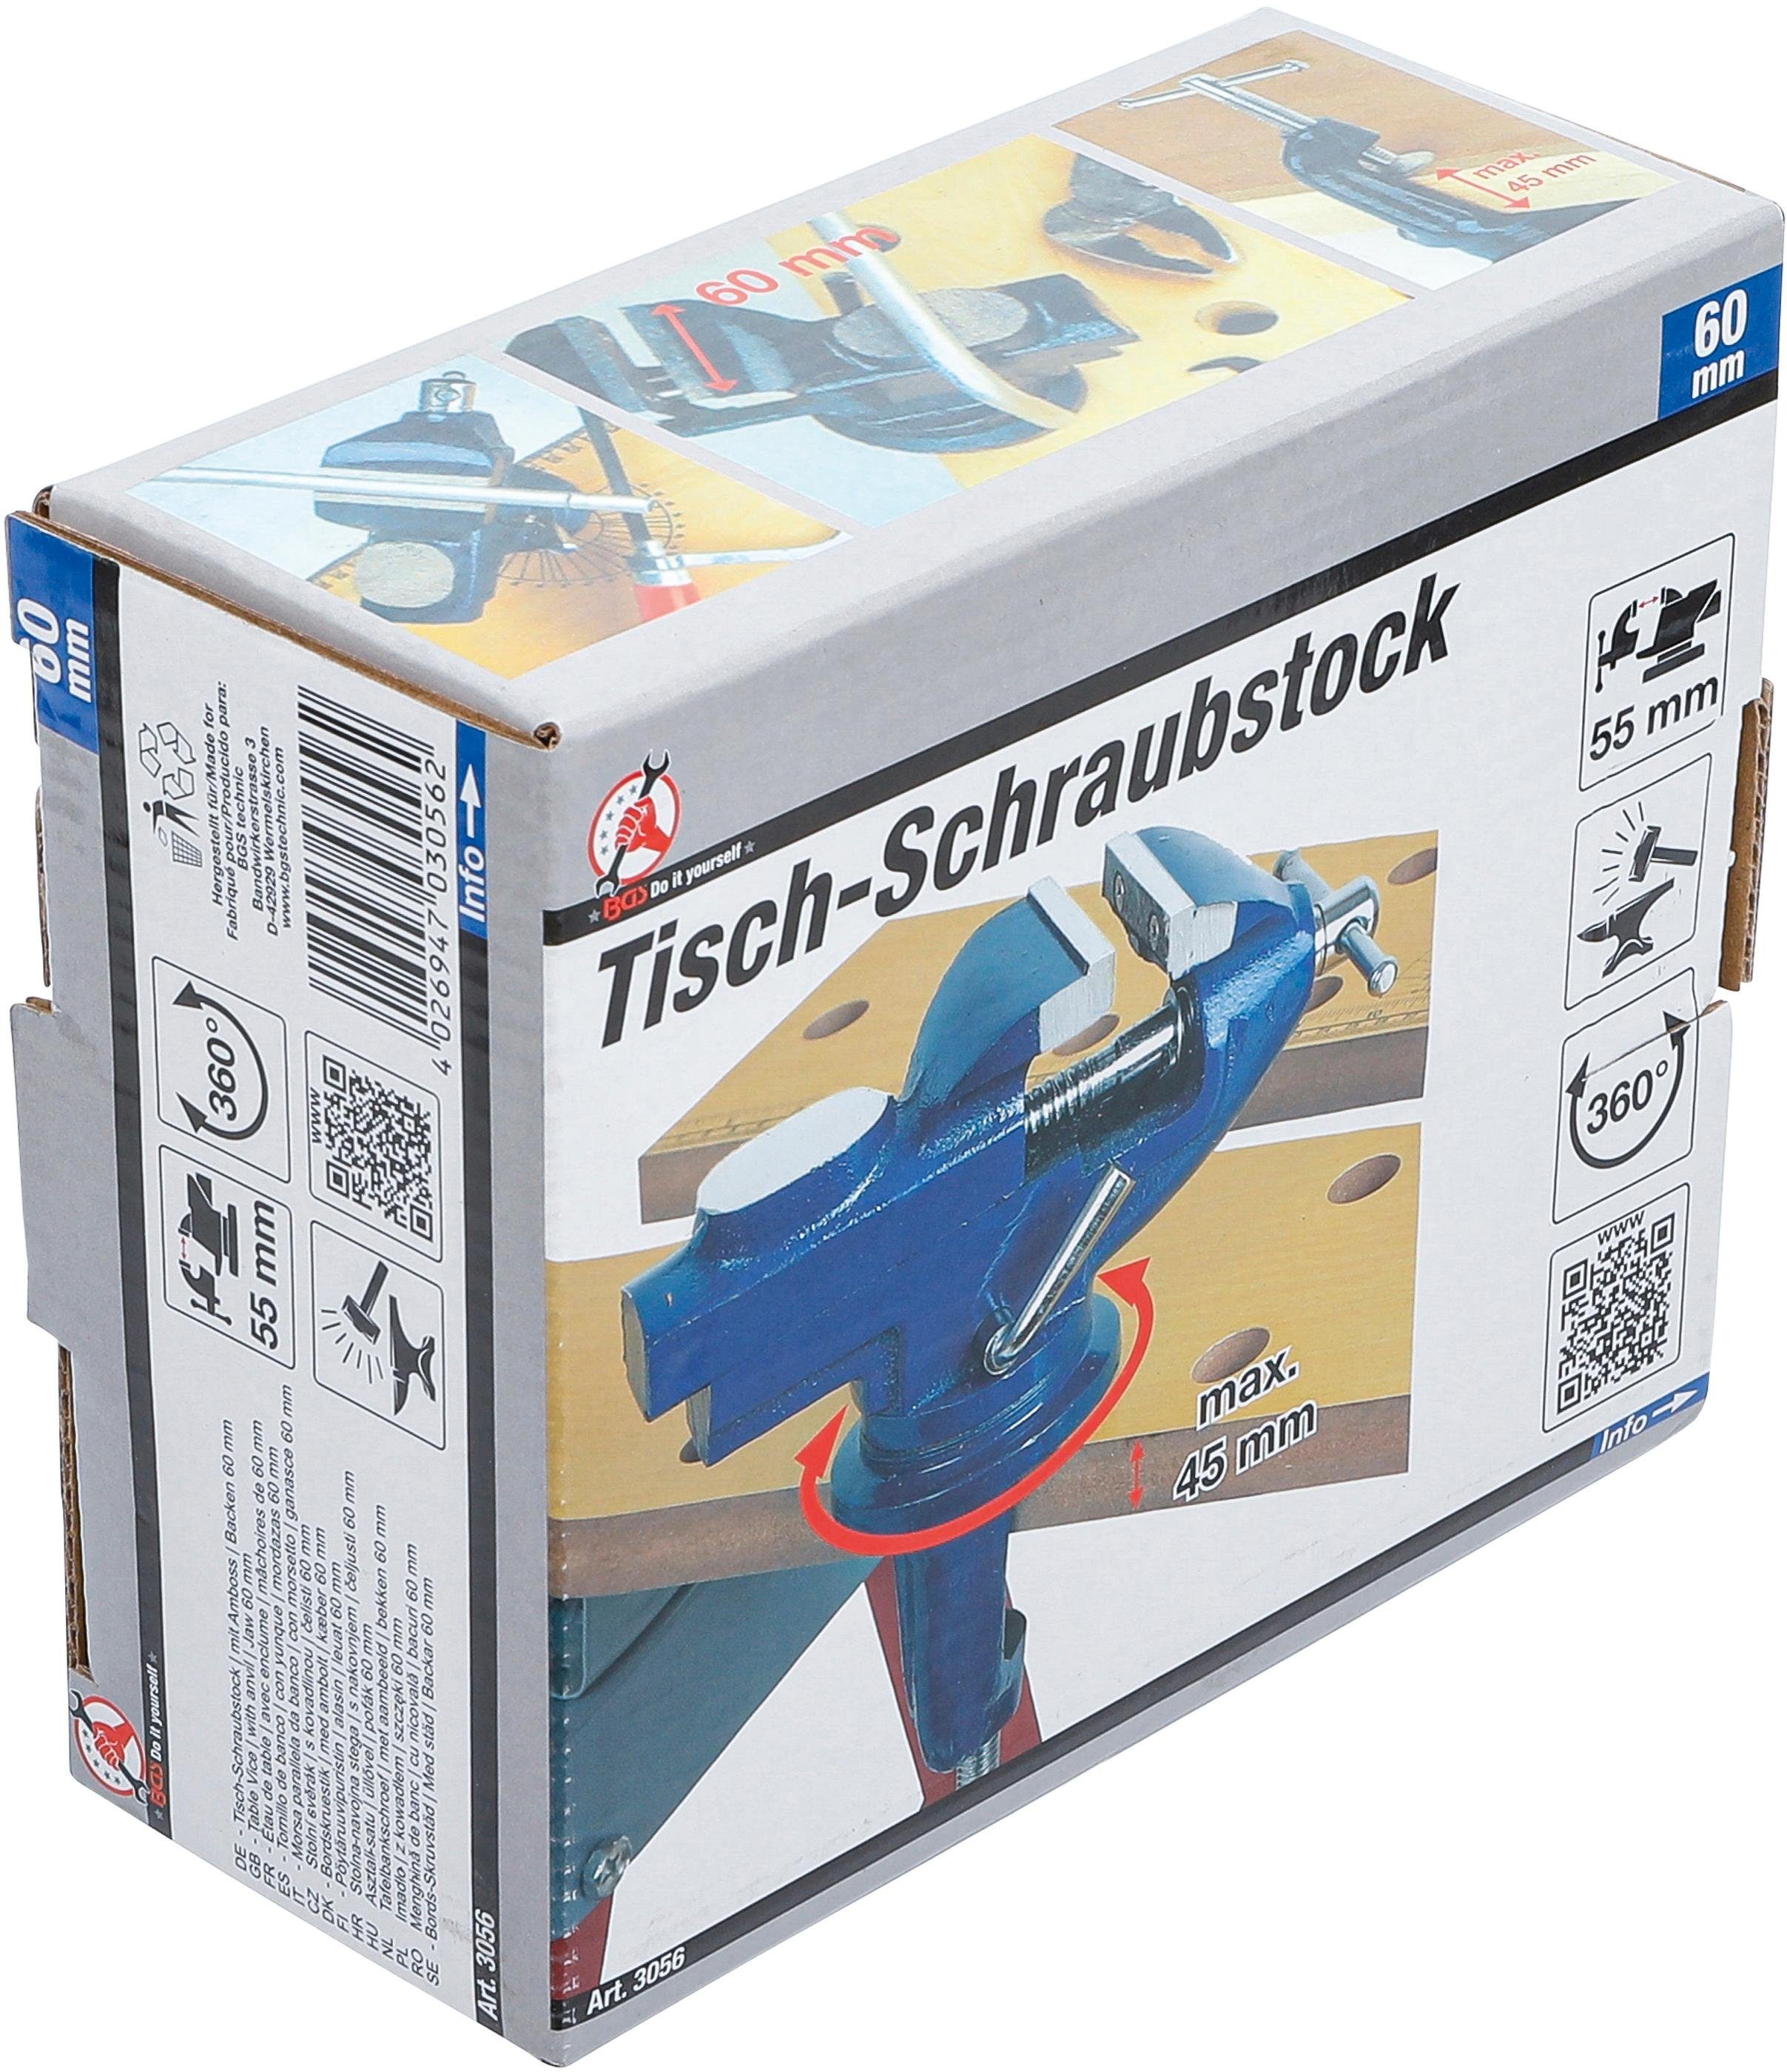 technic Schraubstock mit Tisch-Schraubstock, BGS 60 Amboss, Backen mm